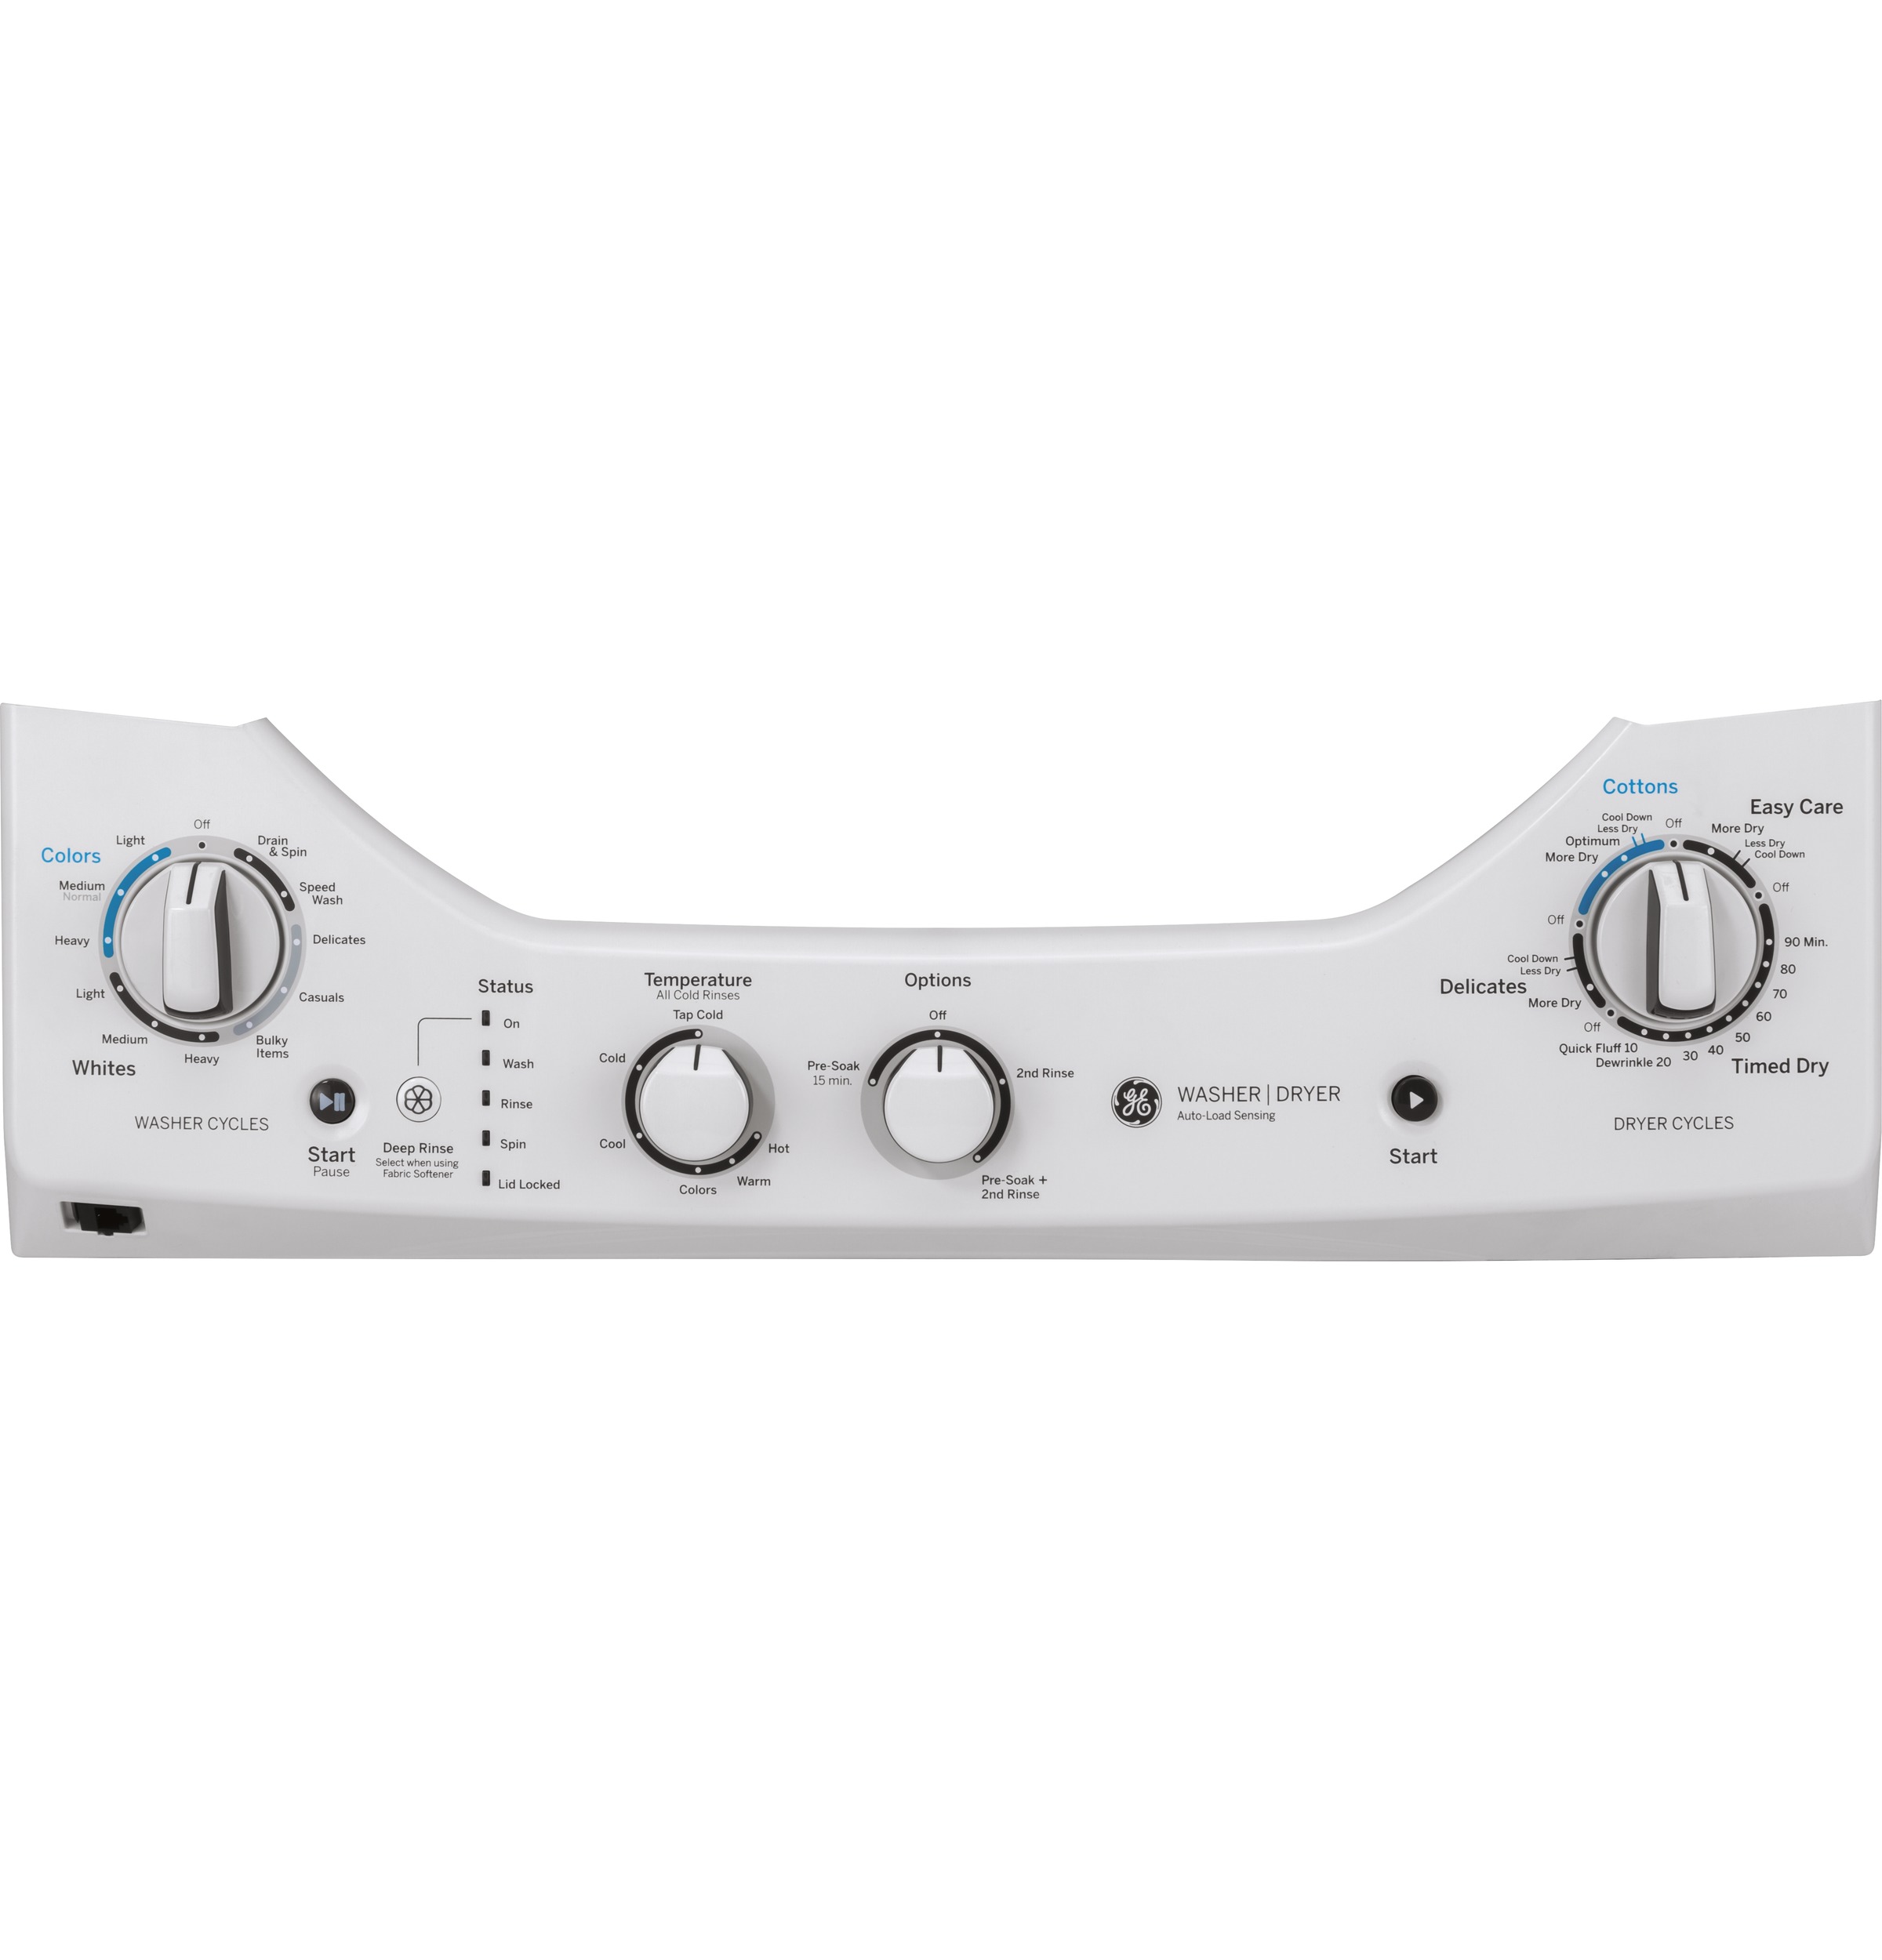 Rotary- electromechanical controls (dryer)